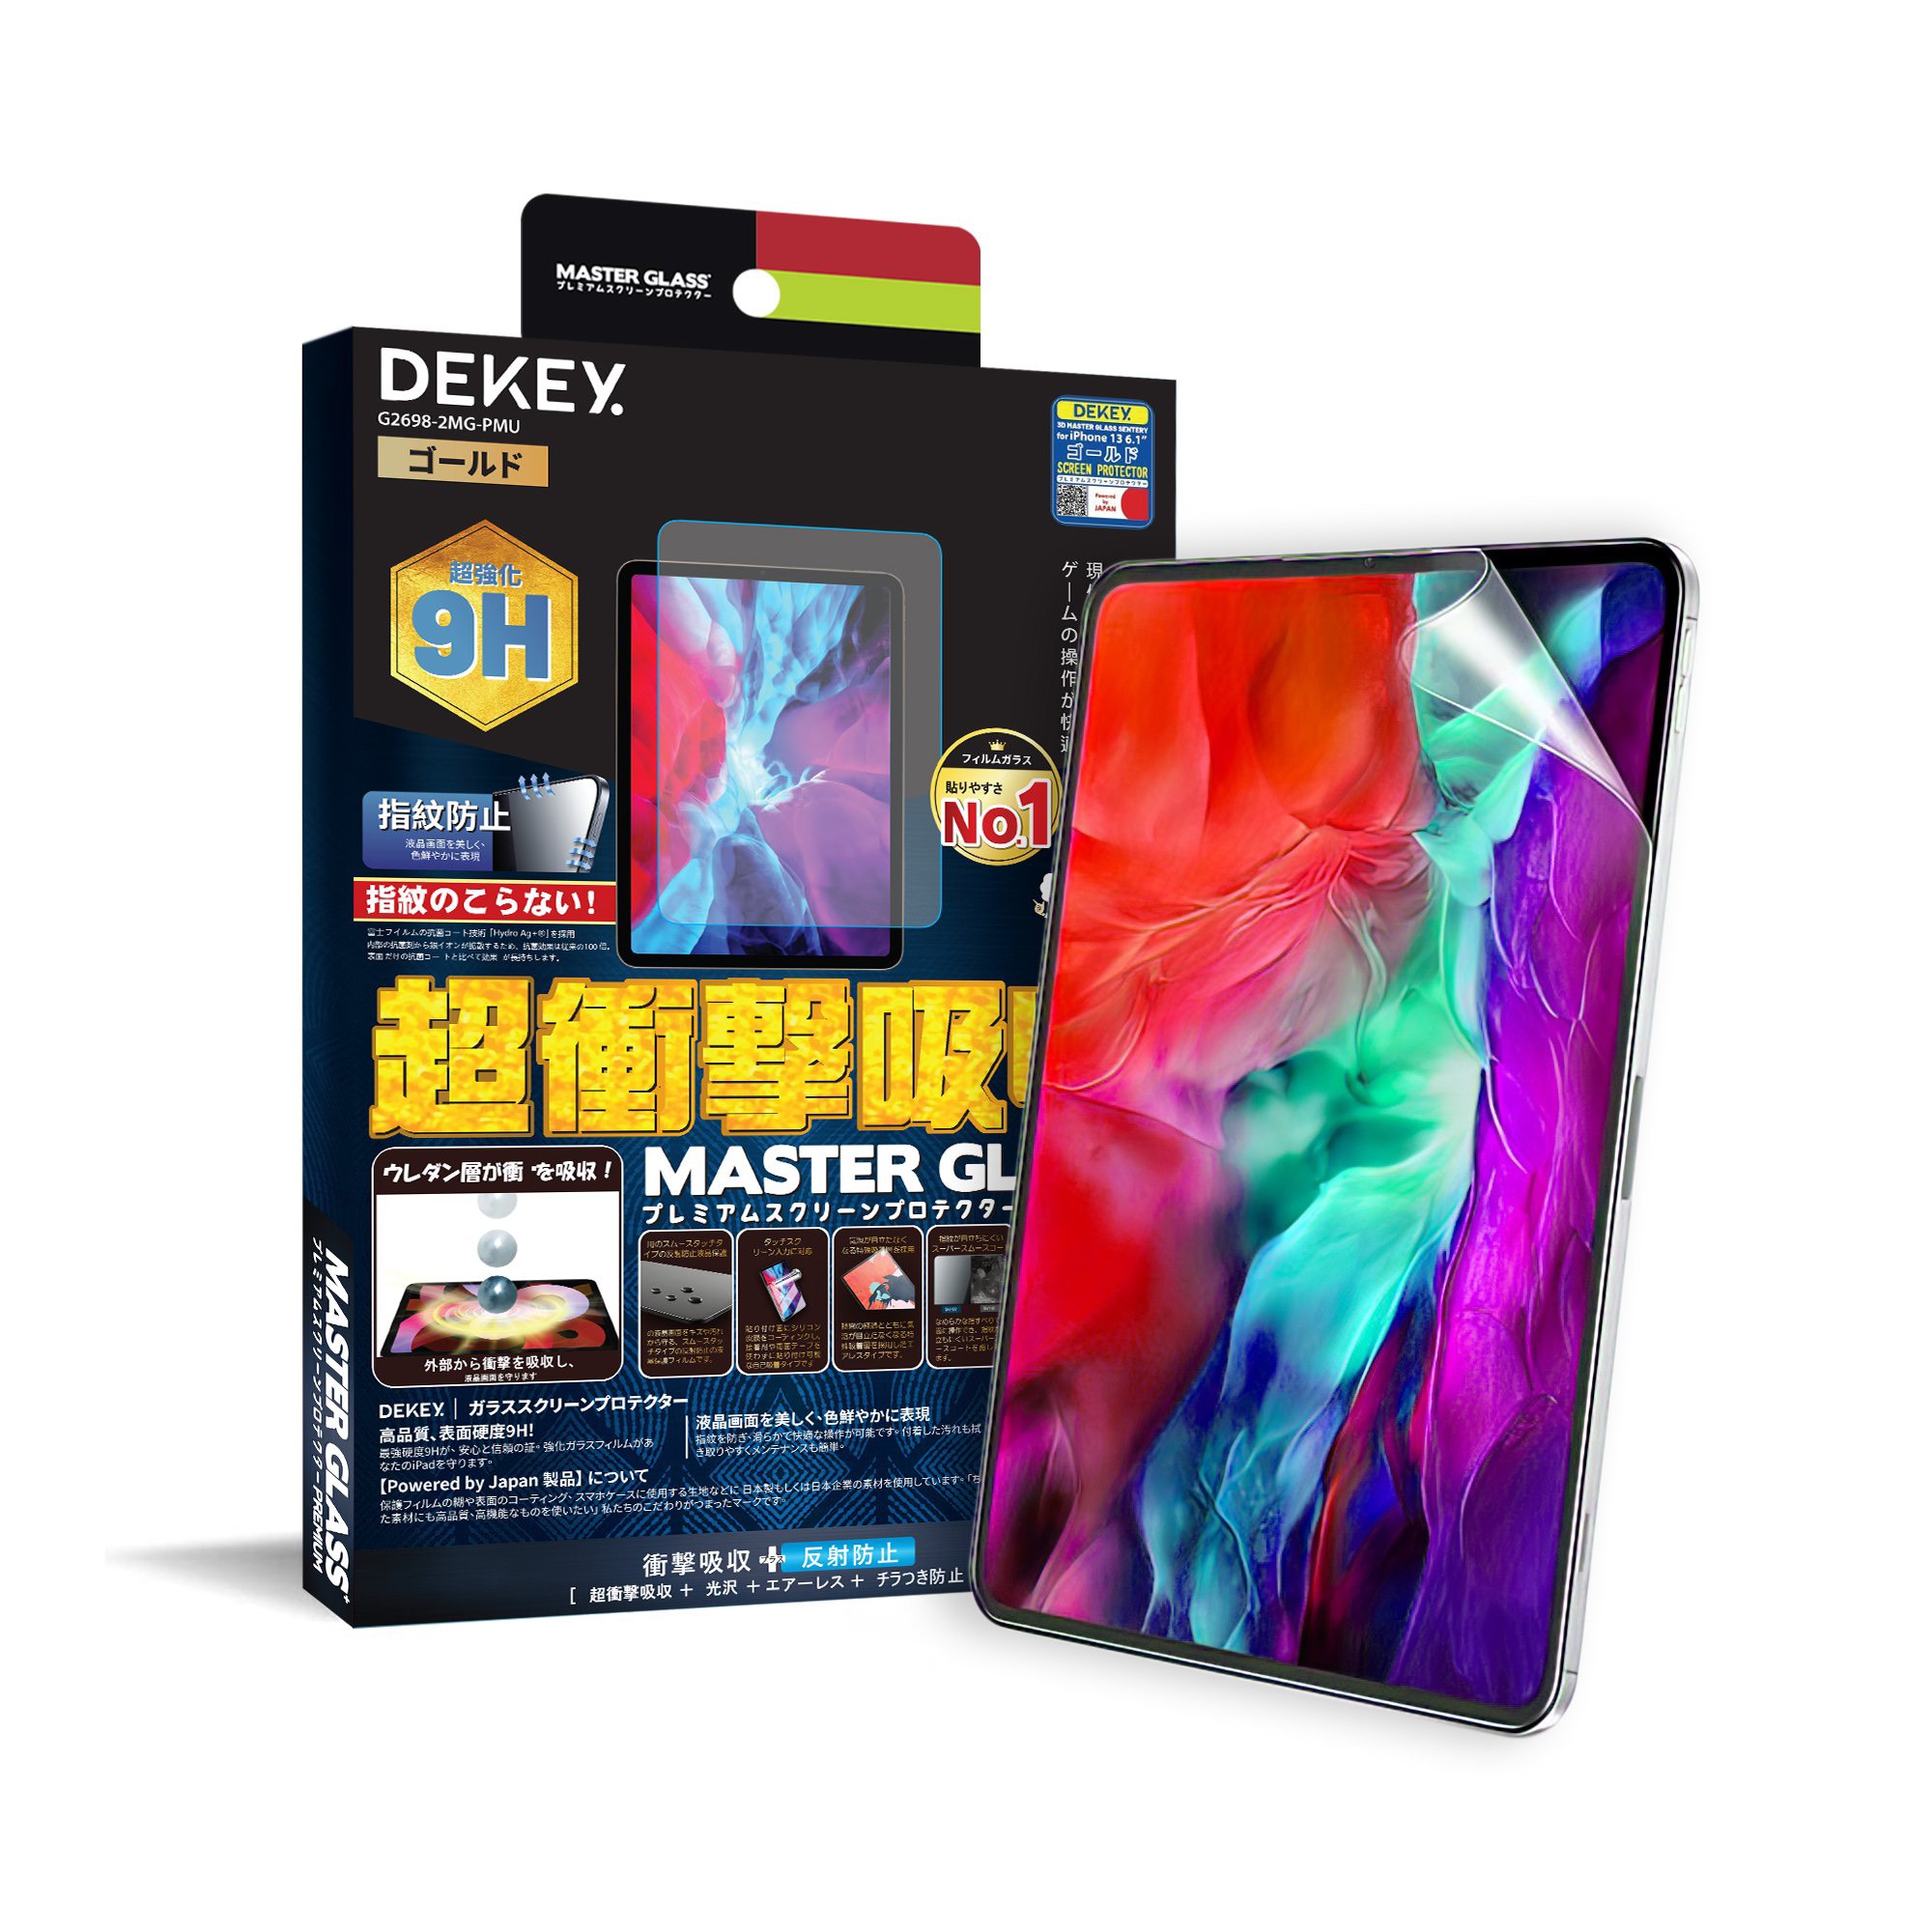 Dekey Master Glass Premium iPad 11 inch